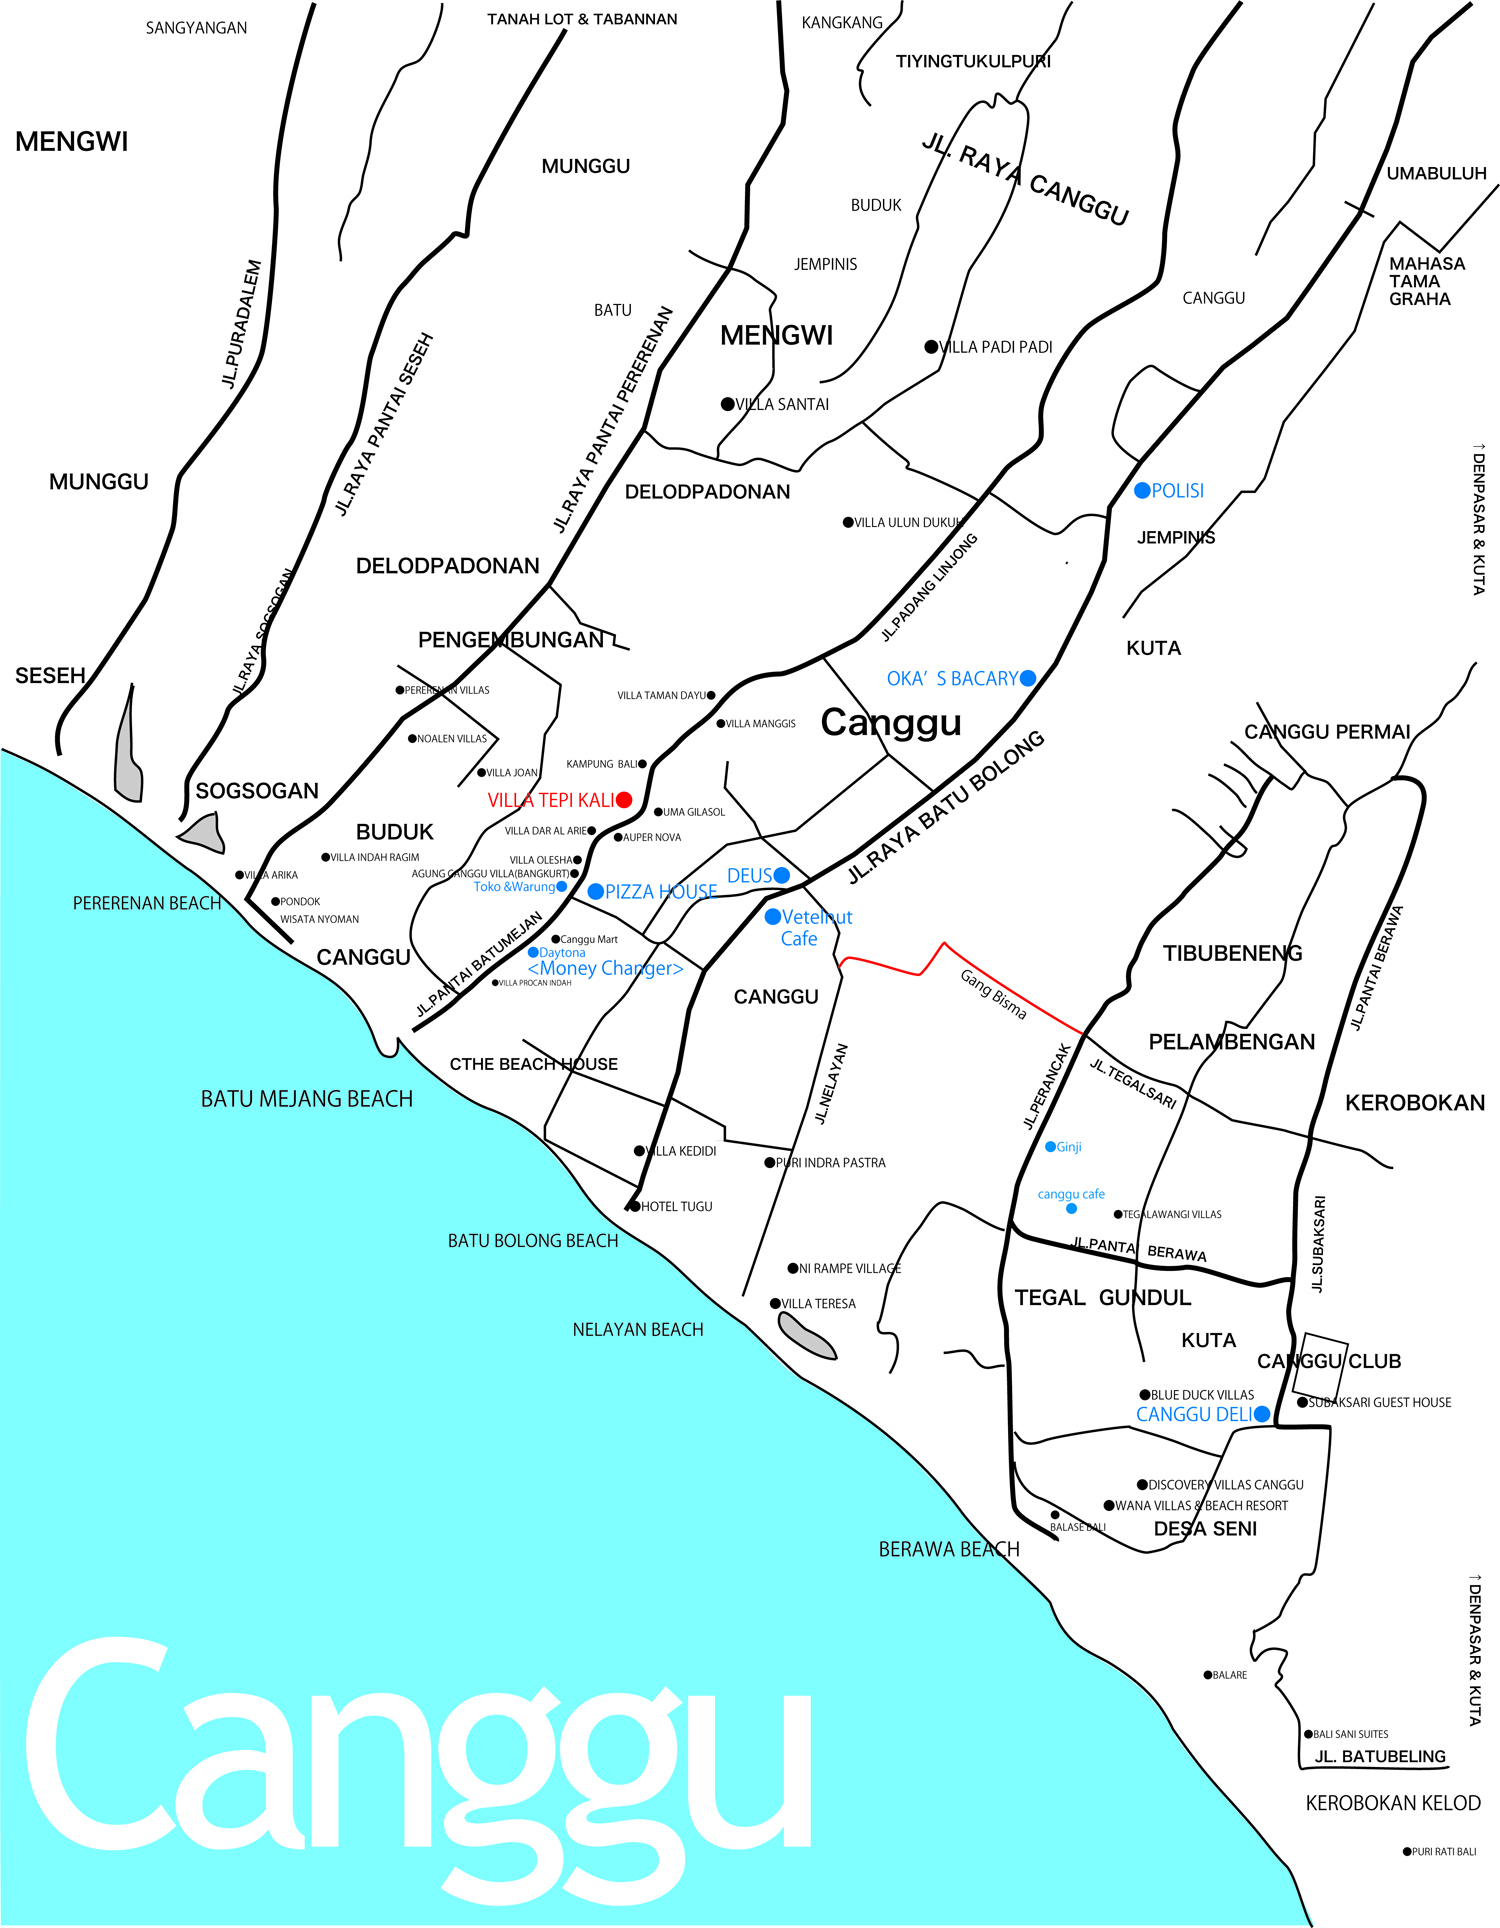 canggu area map